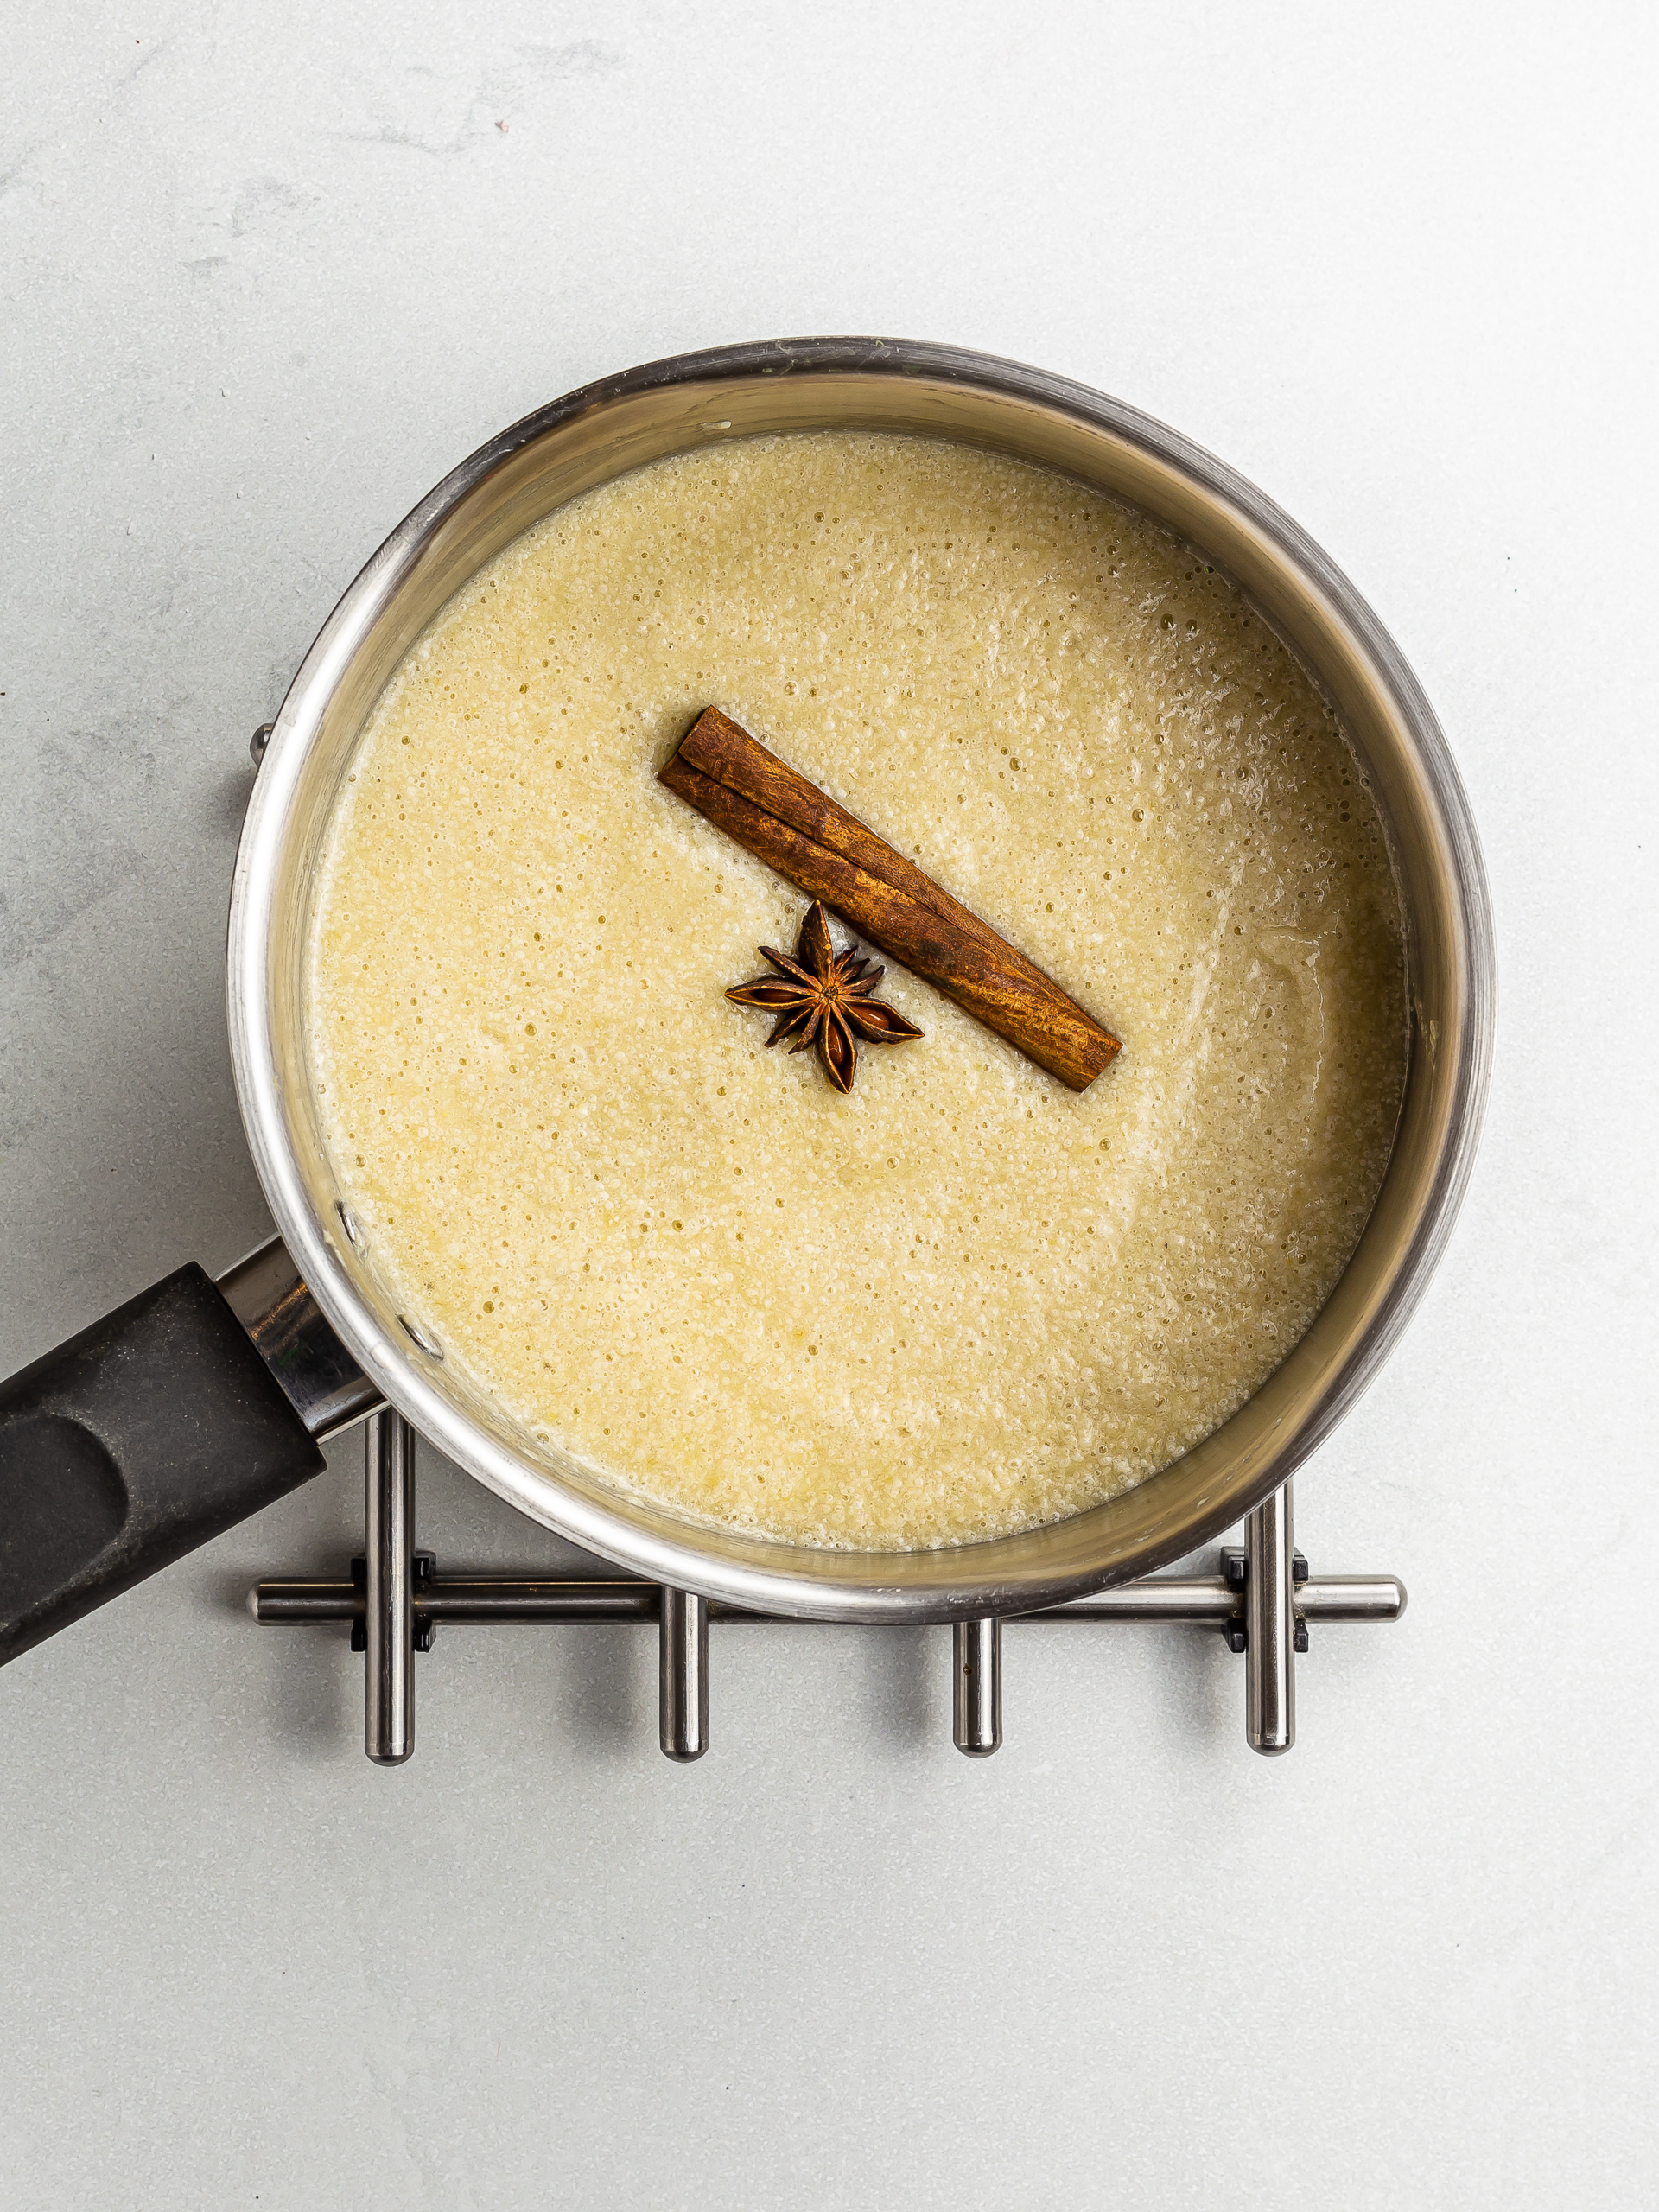 cooking plantain porridge in a pot